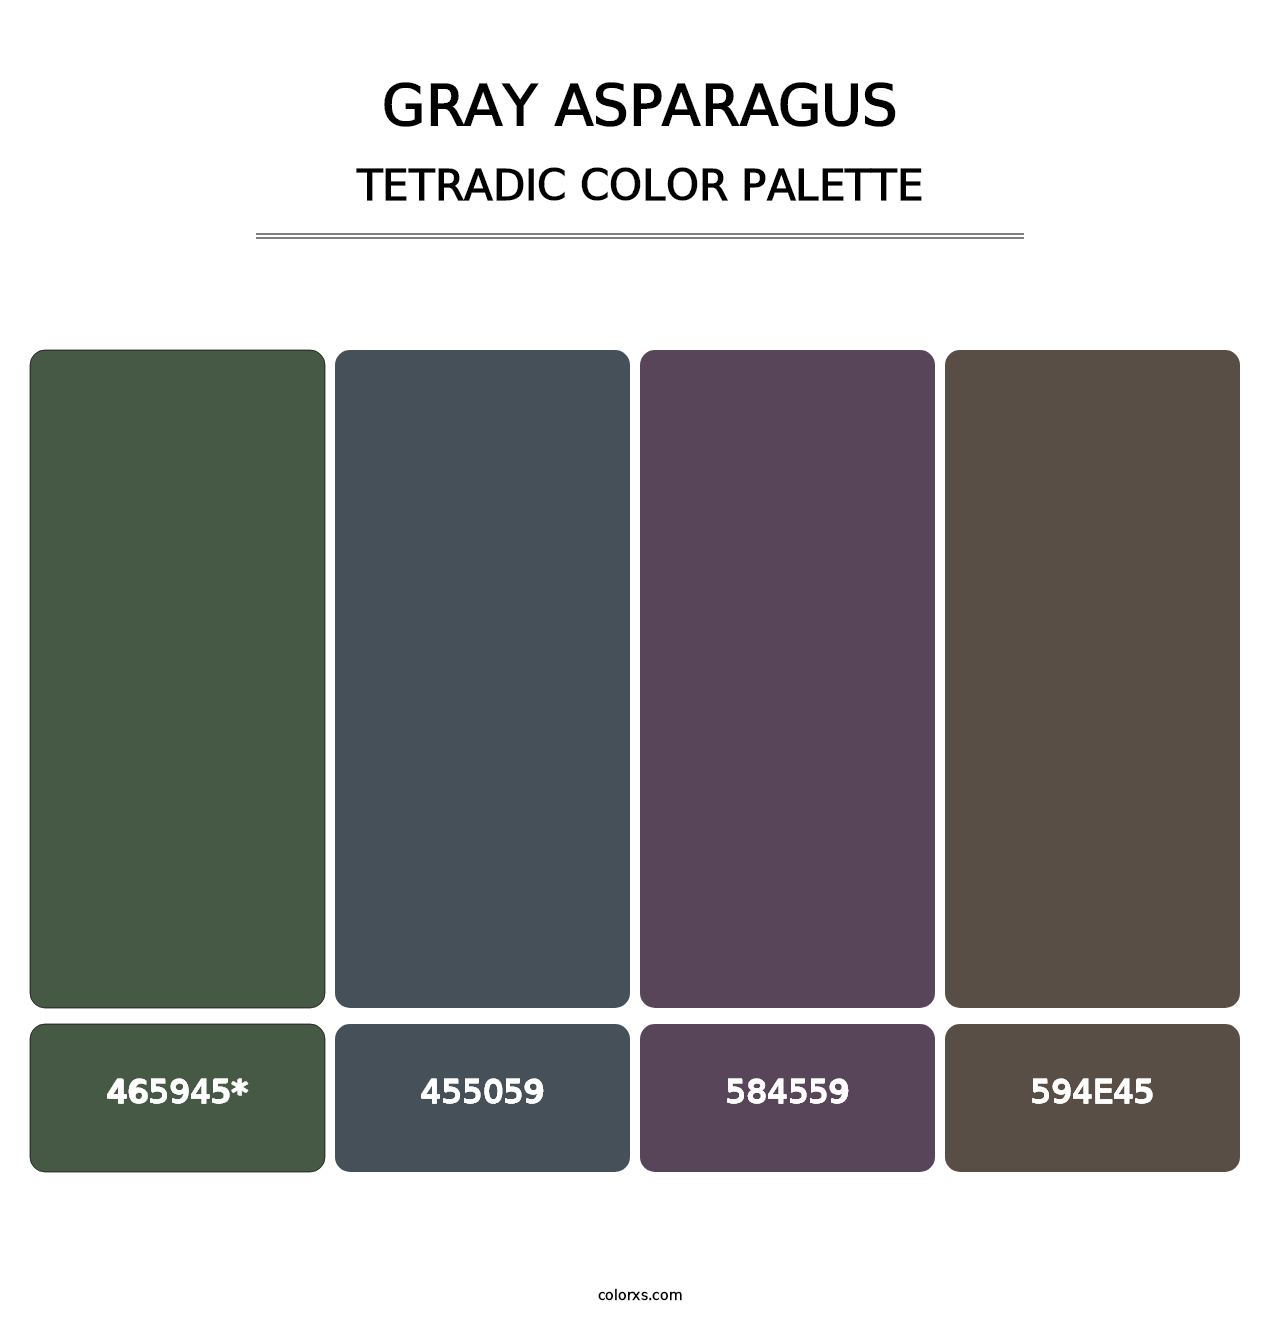 Gray Asparagus - Tetradic Color Palette